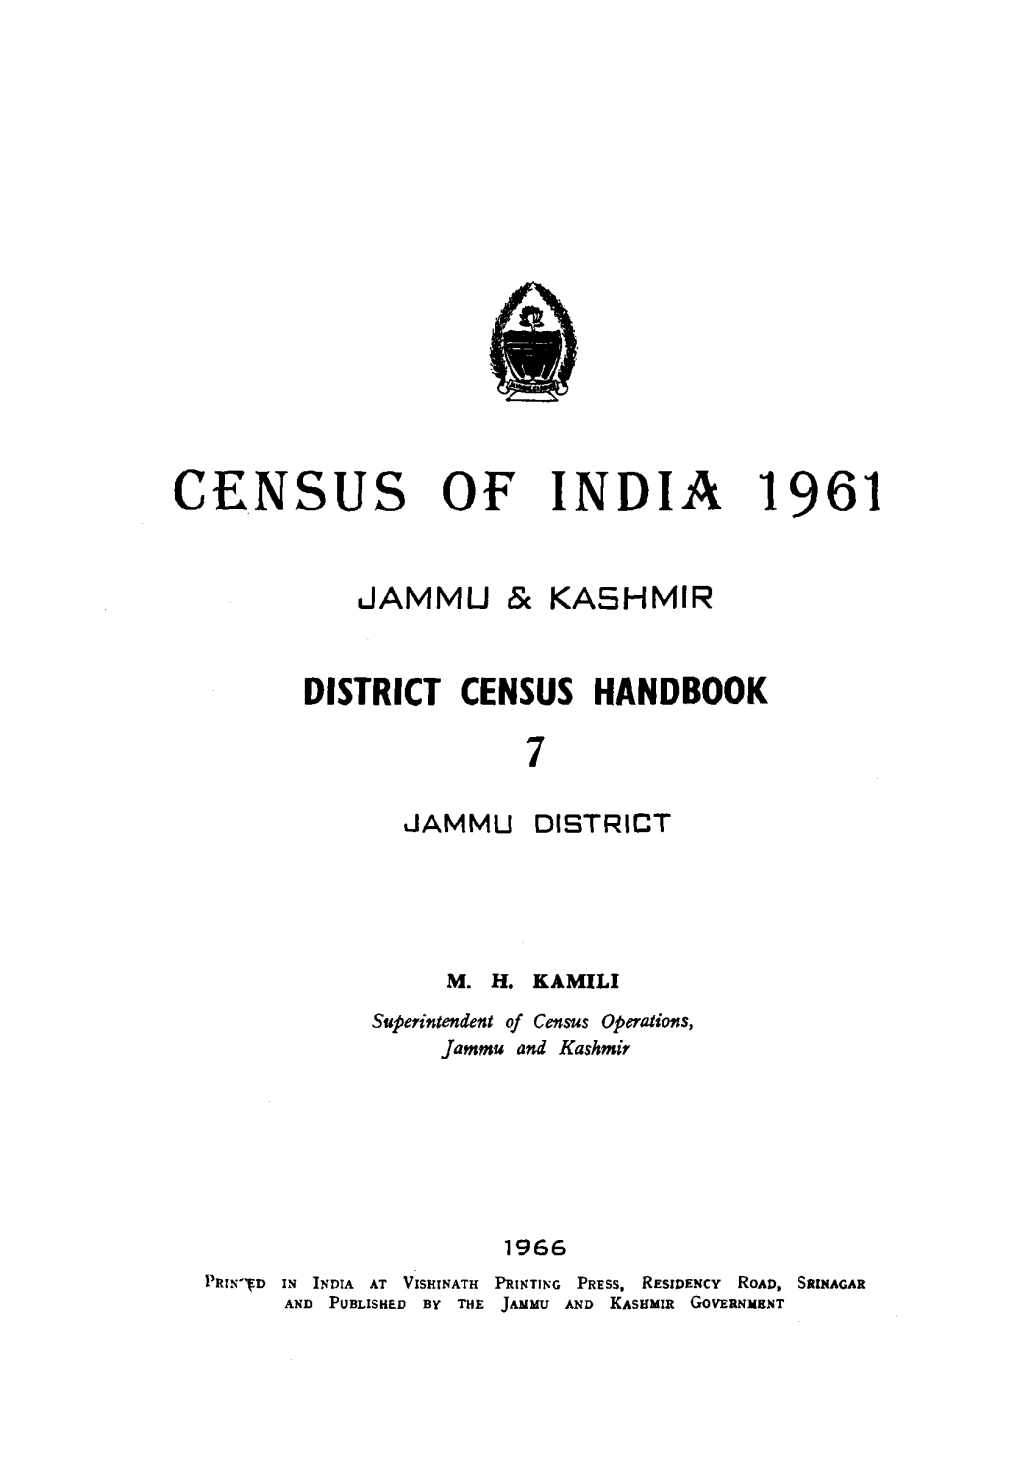 District Census Handbook, 7, Jammu